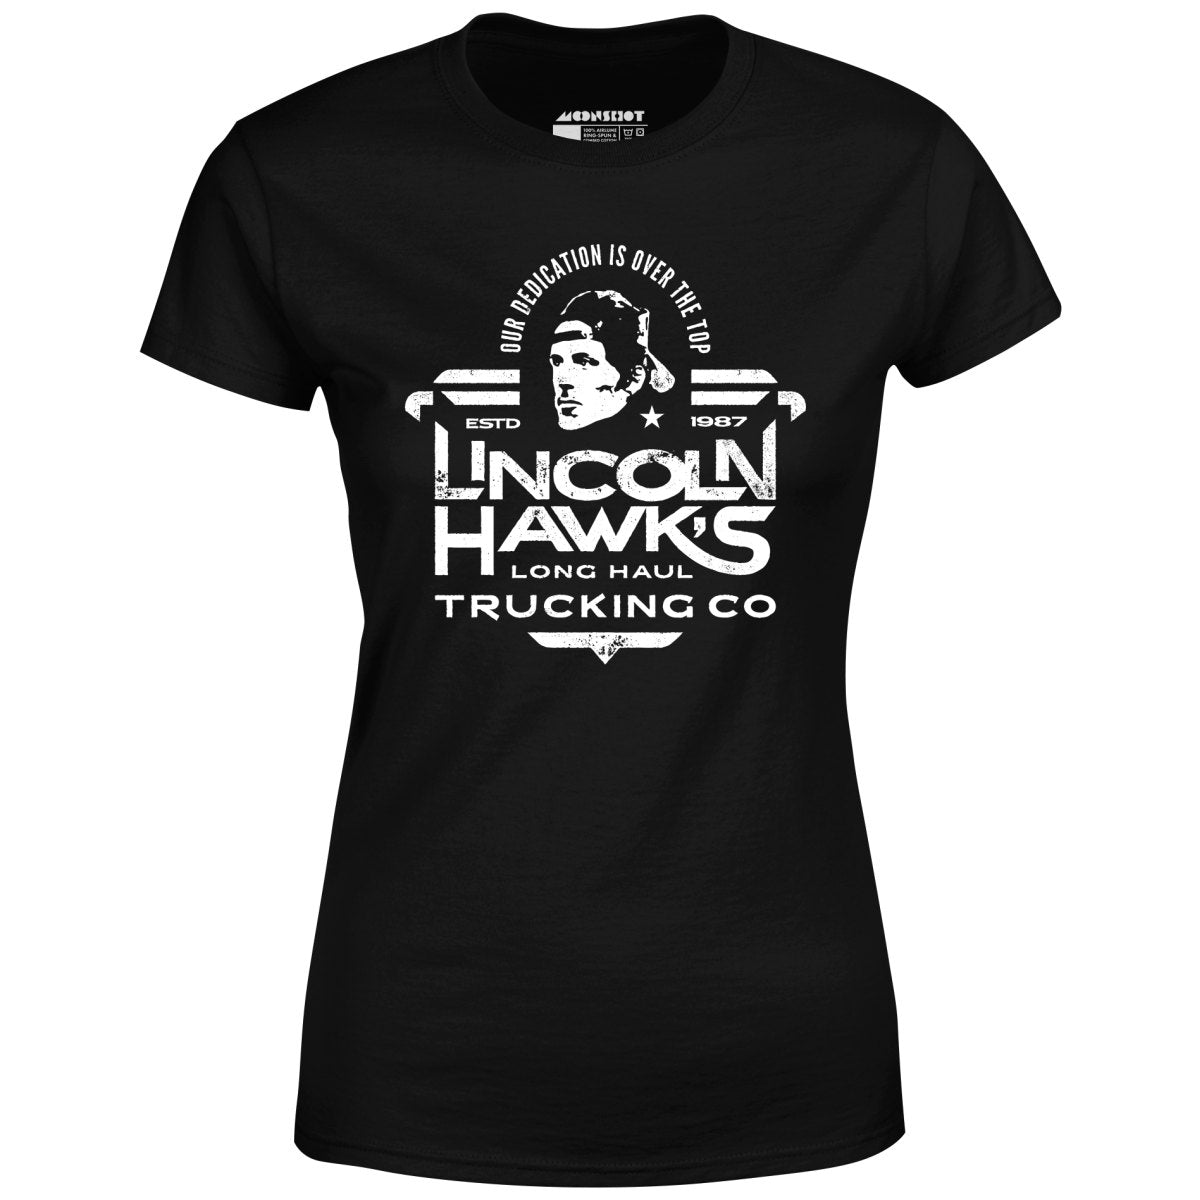 Lincoln Hawk's Trucking Co. - Women's T-Shirt